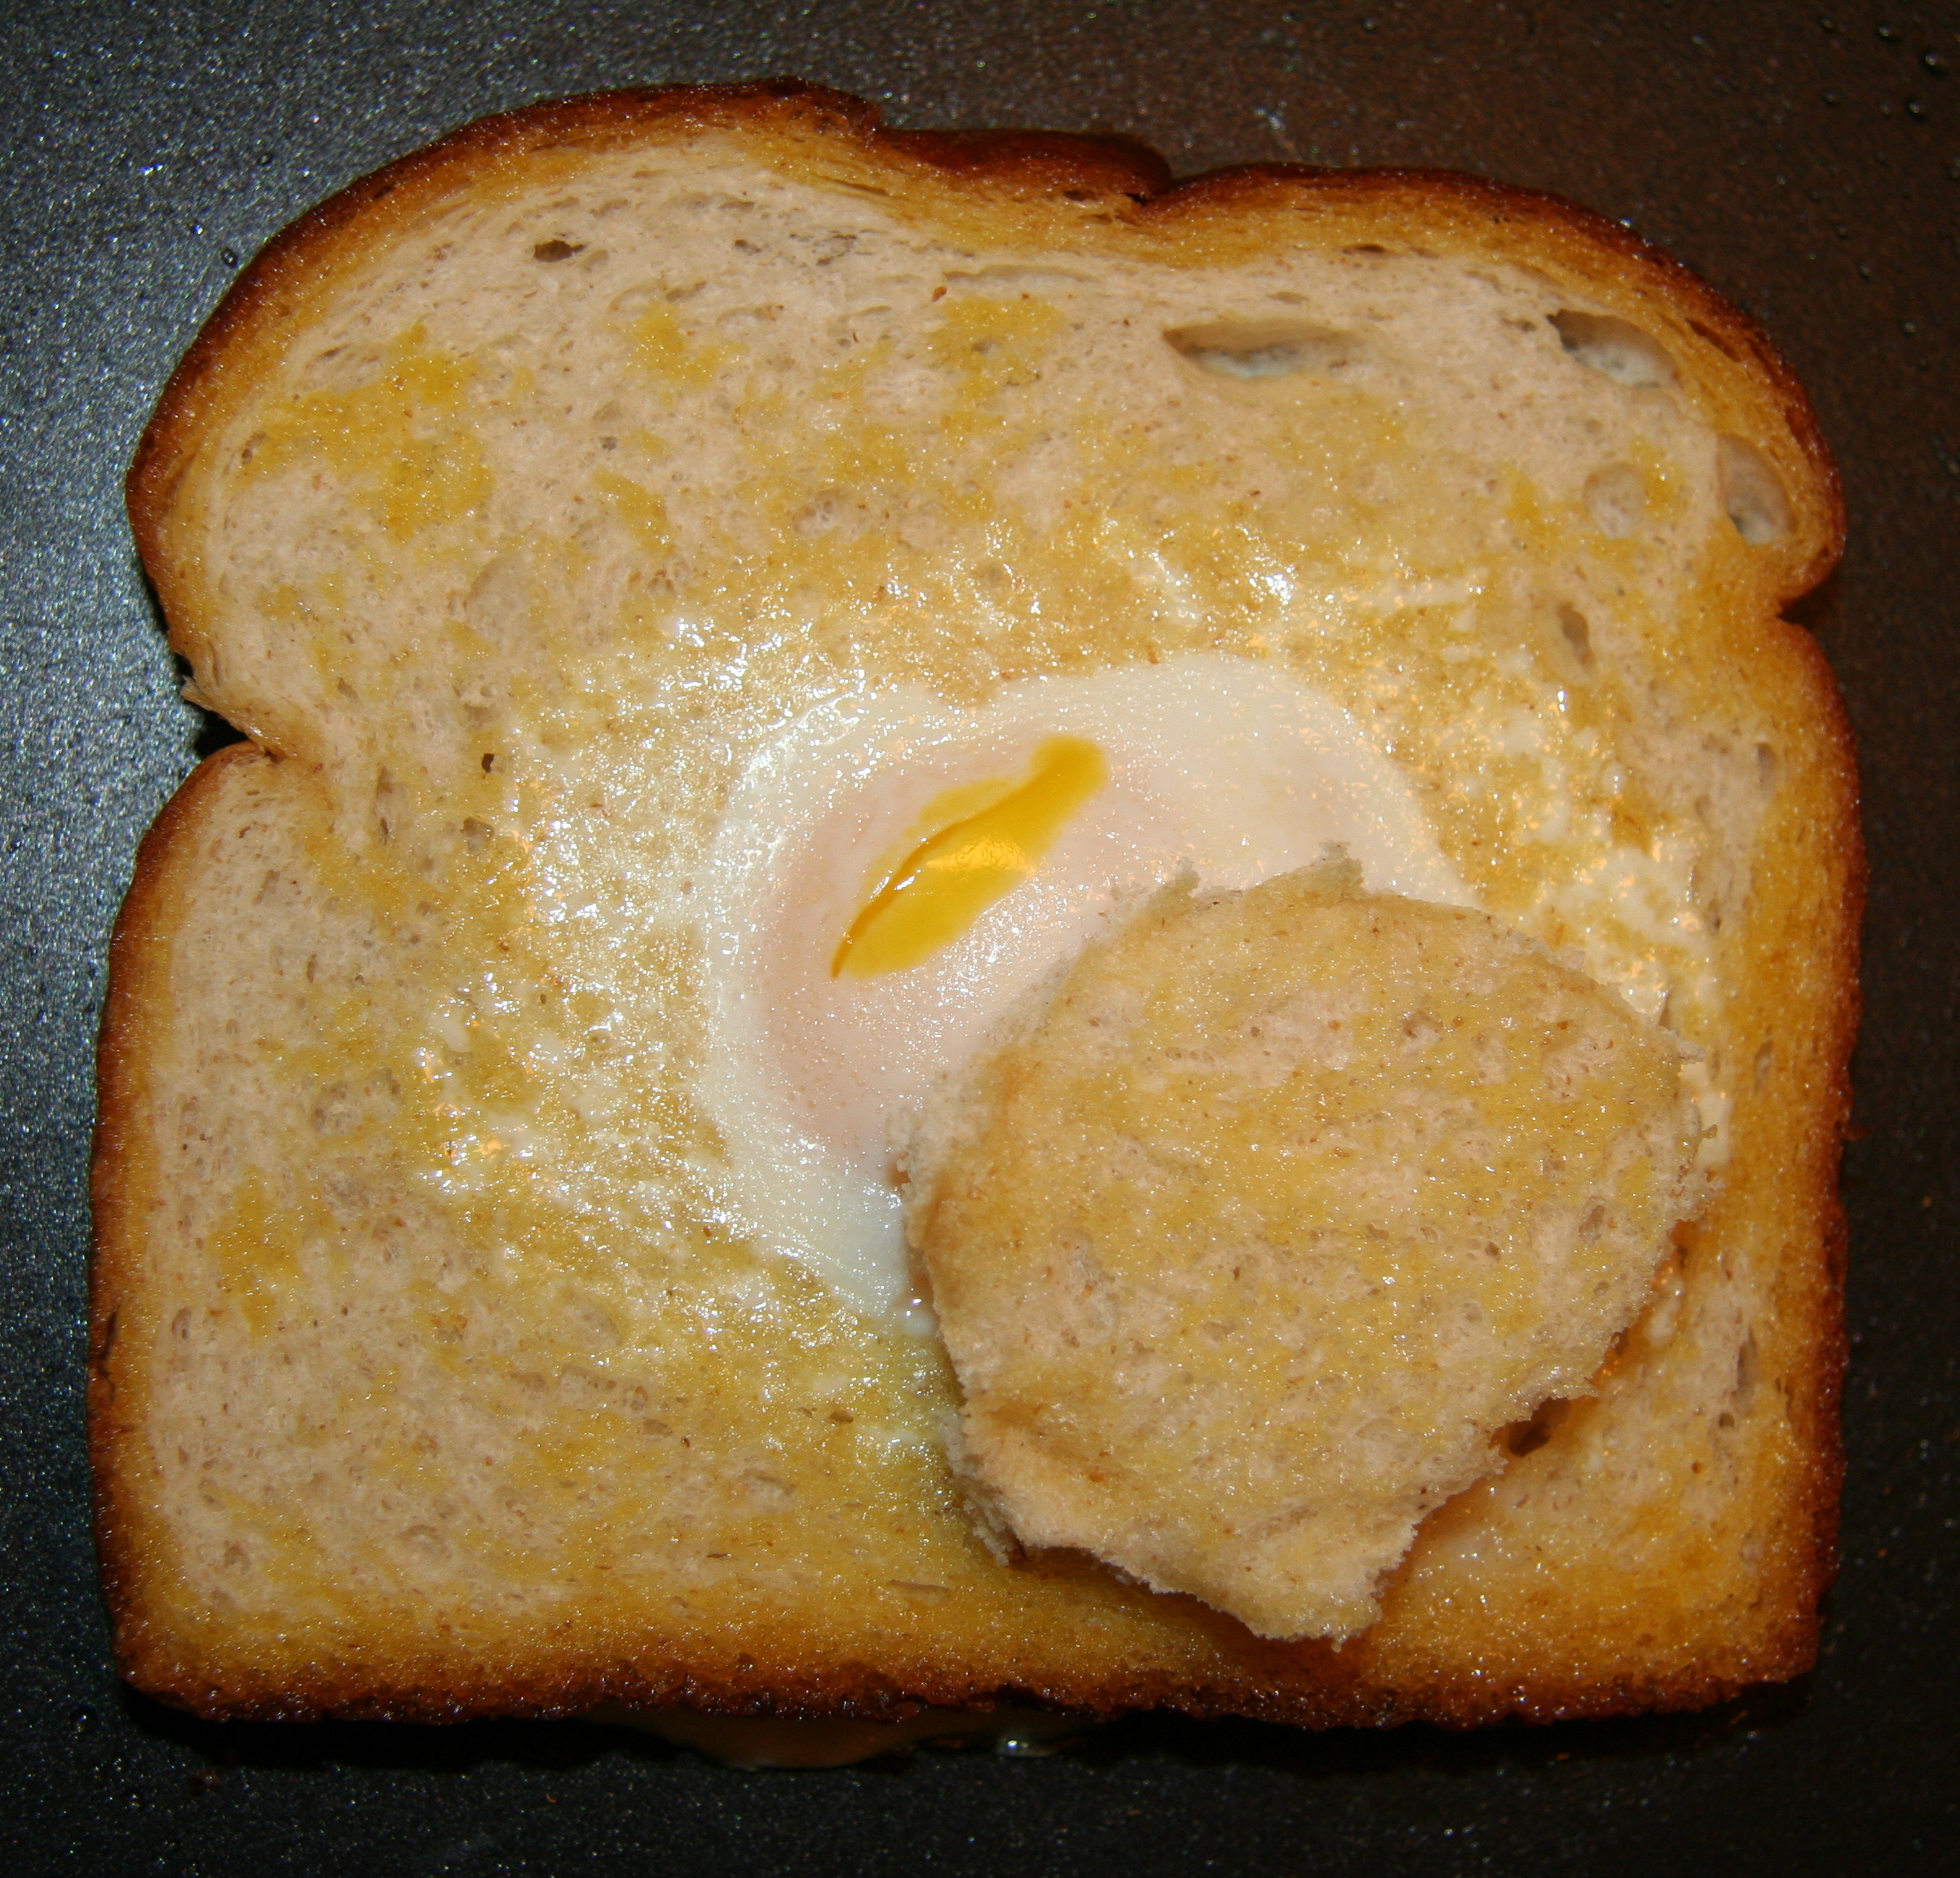 https://upload.wikimedia.org/wikipedia/commons/6/68/EggToast.jpg